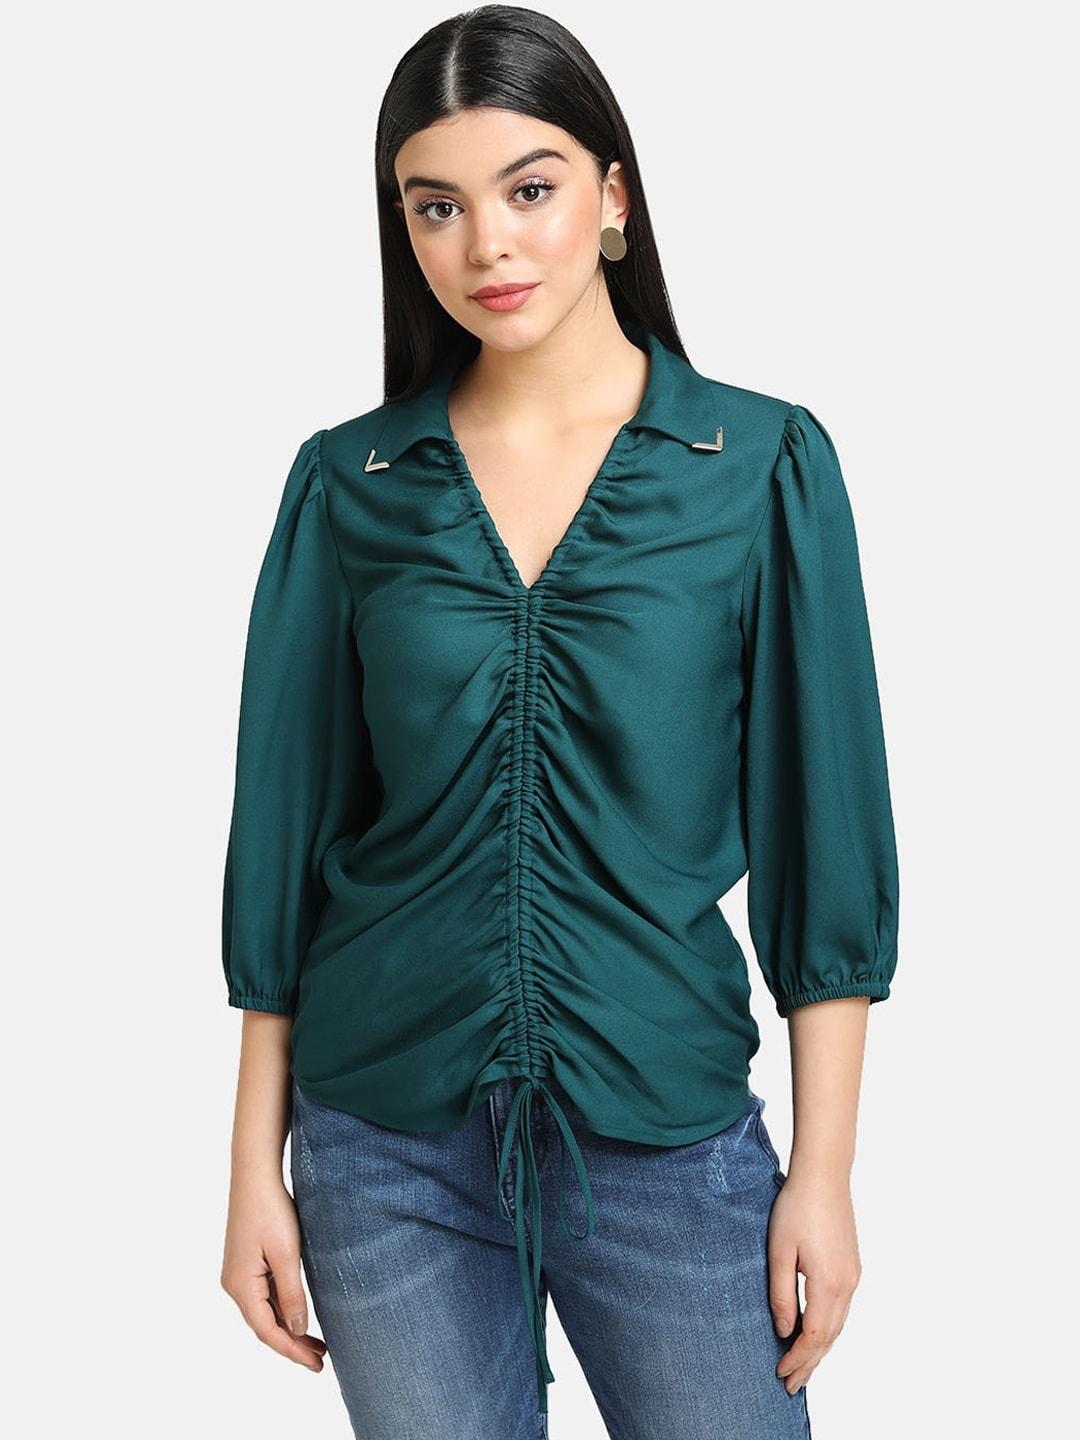 Kazo Green Shirt Style Top